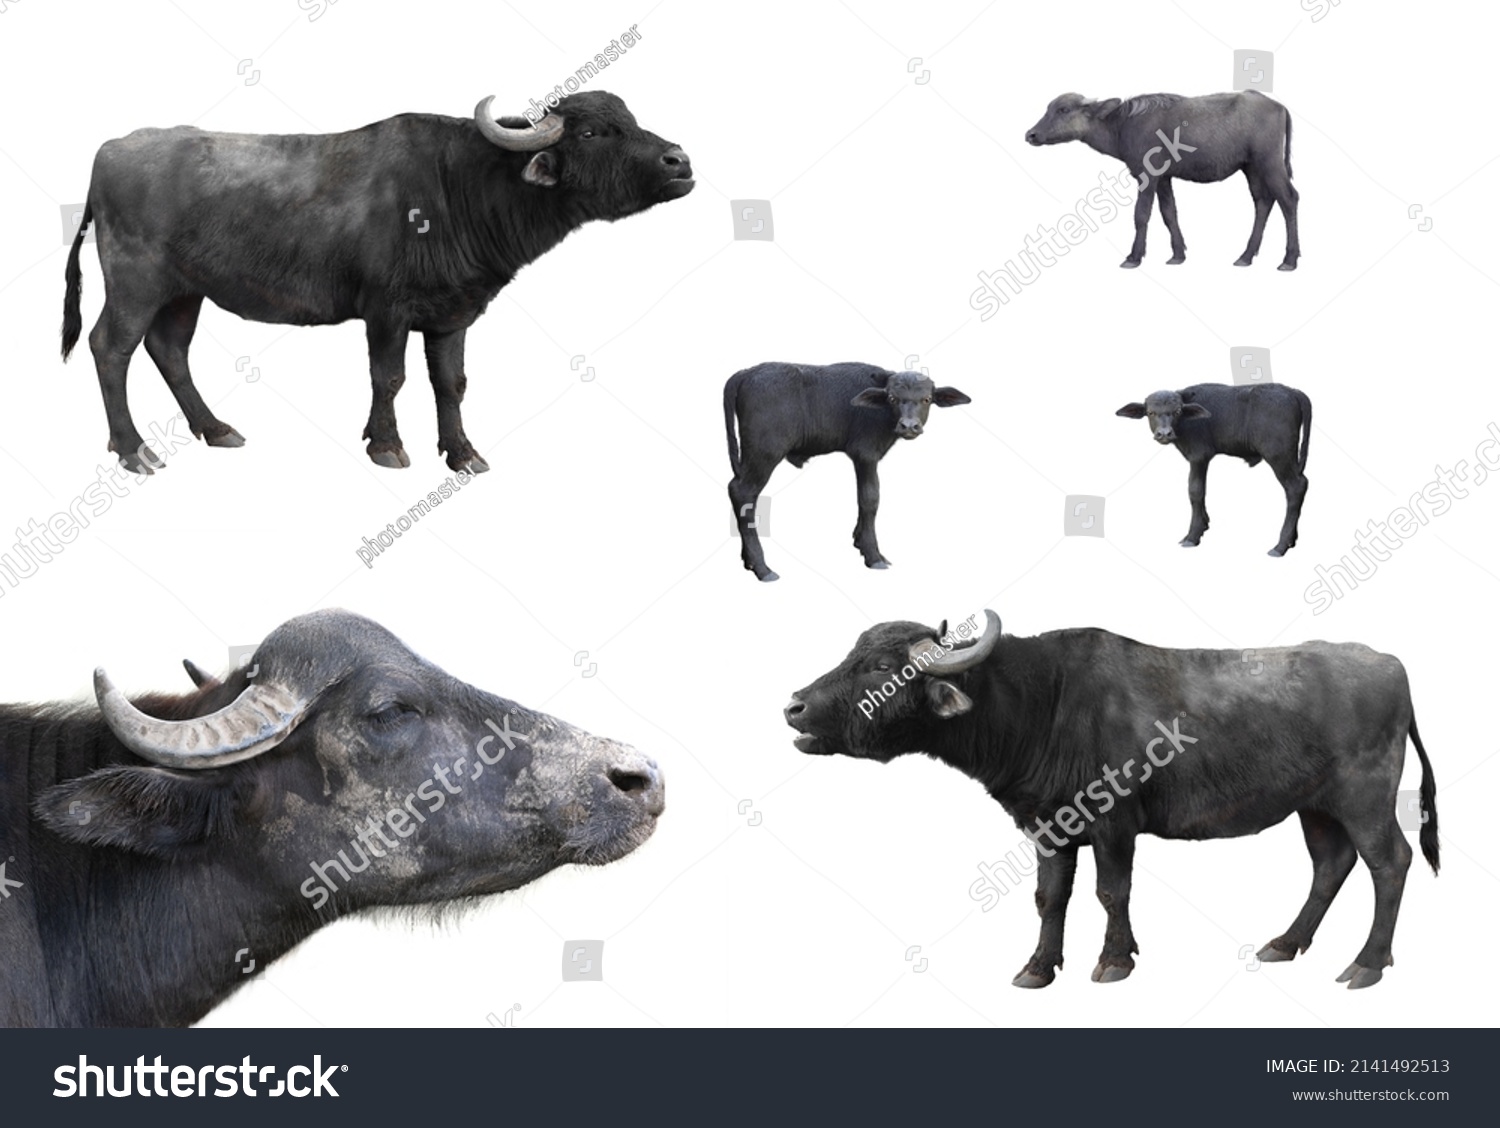 File:African buffalo Syncerus caffer retouched.jpg - Wikipedia